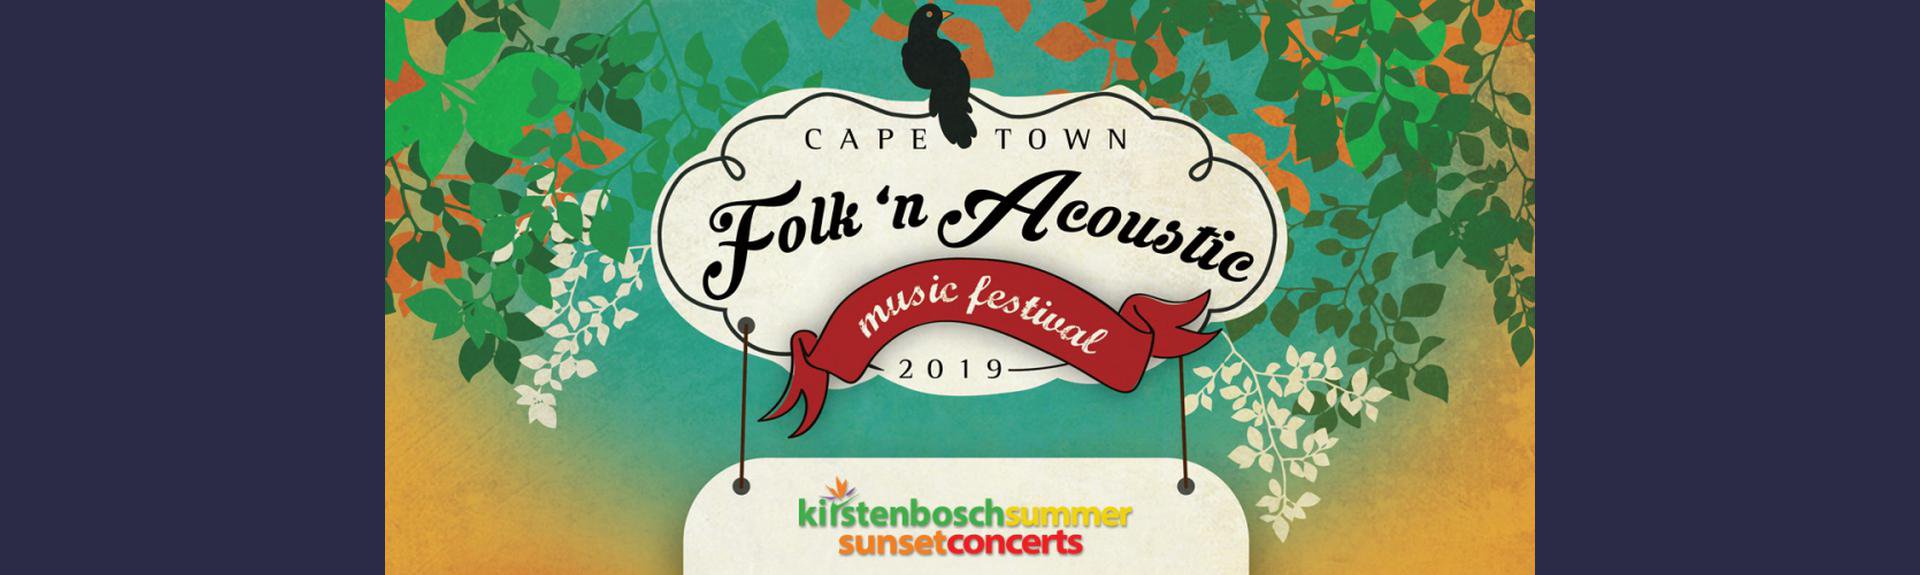 Cape Town Folk ‘n Acoustic Music Festival 